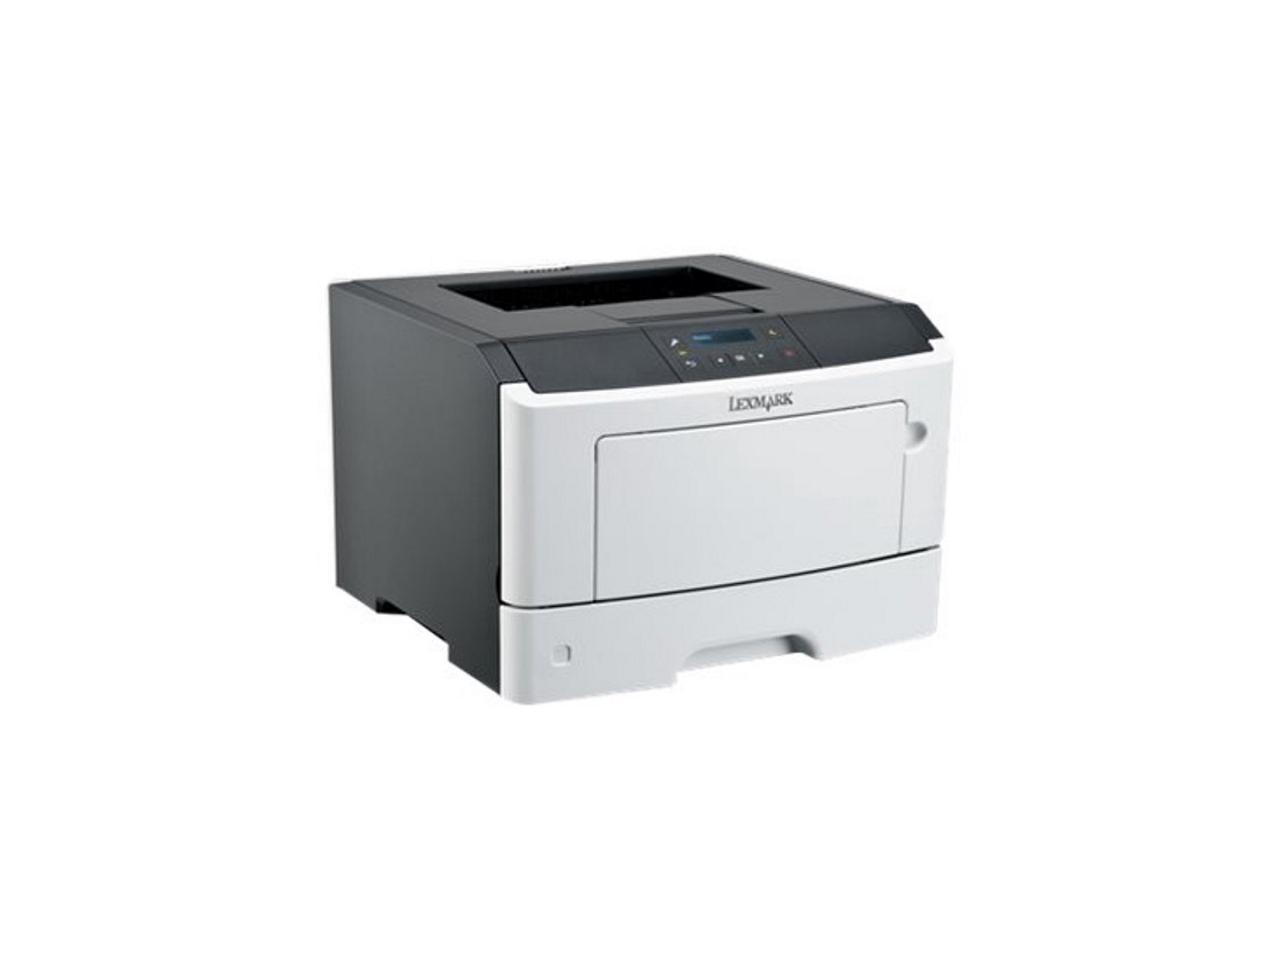 Lexmark MS312DN Monochrome Laser Printer - EU Power - 35S4378 Used